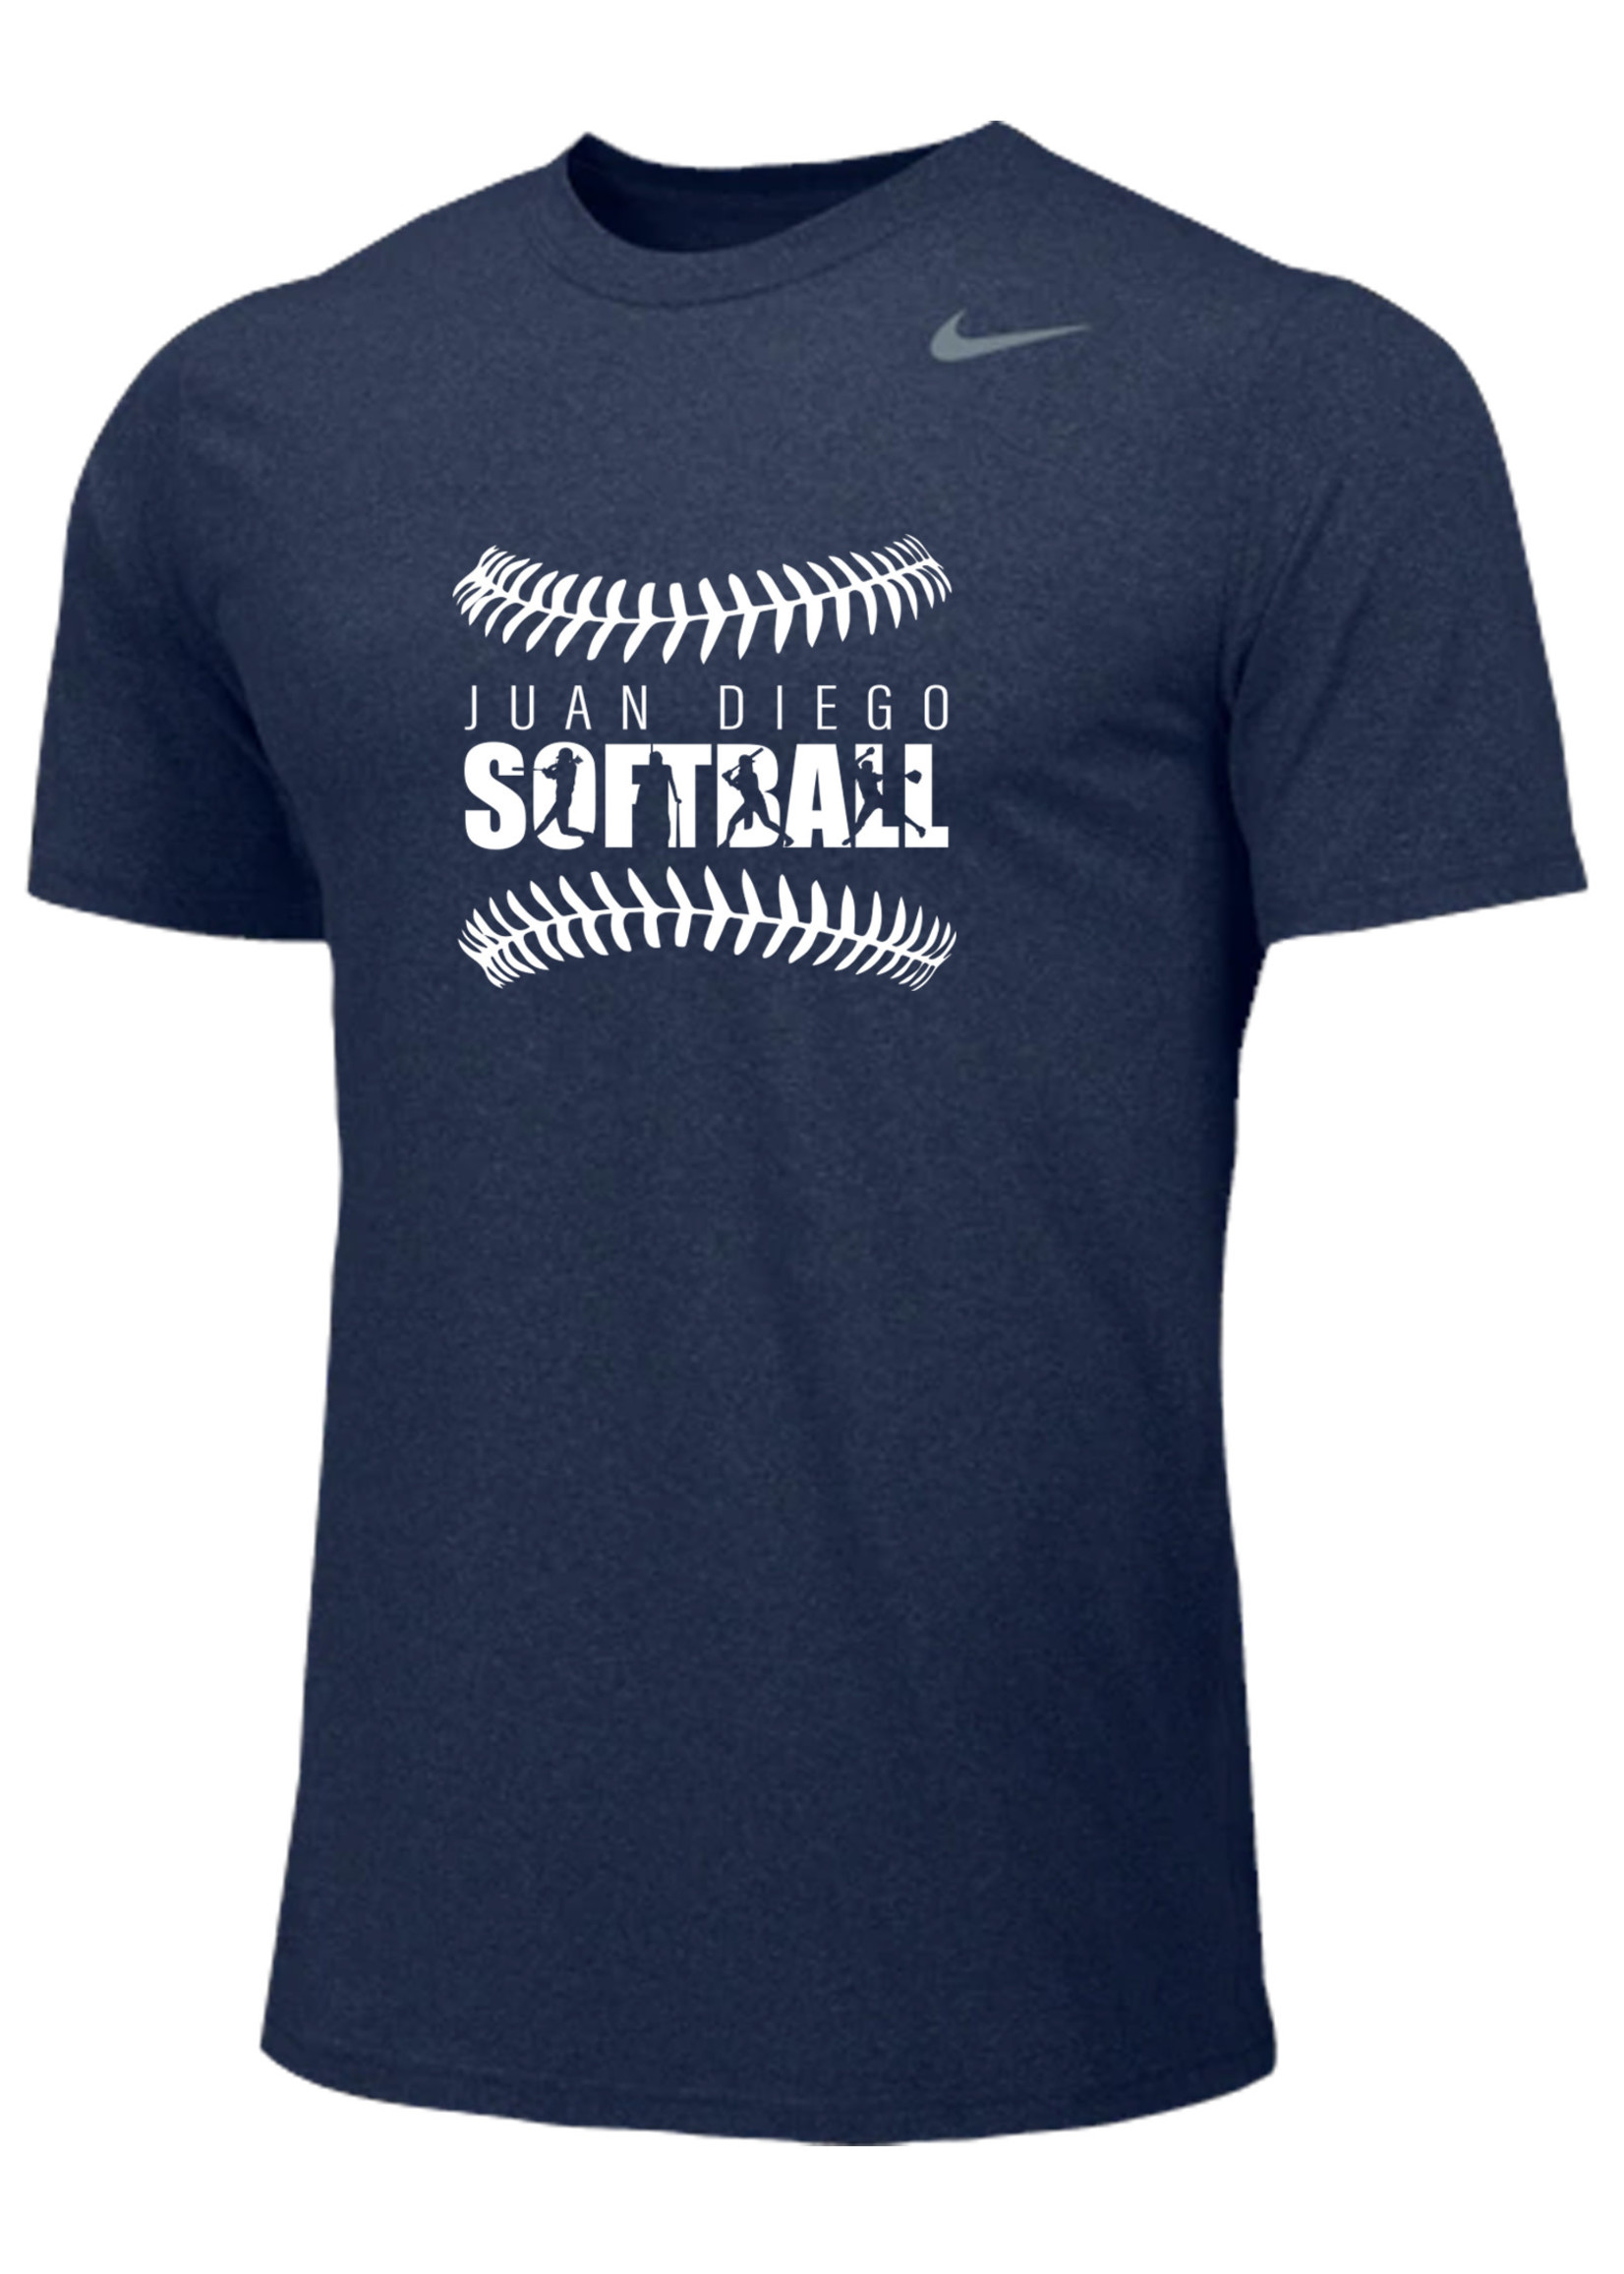 NON-UNIFORM JD Softball Nike Spirit T-Shirt, new design